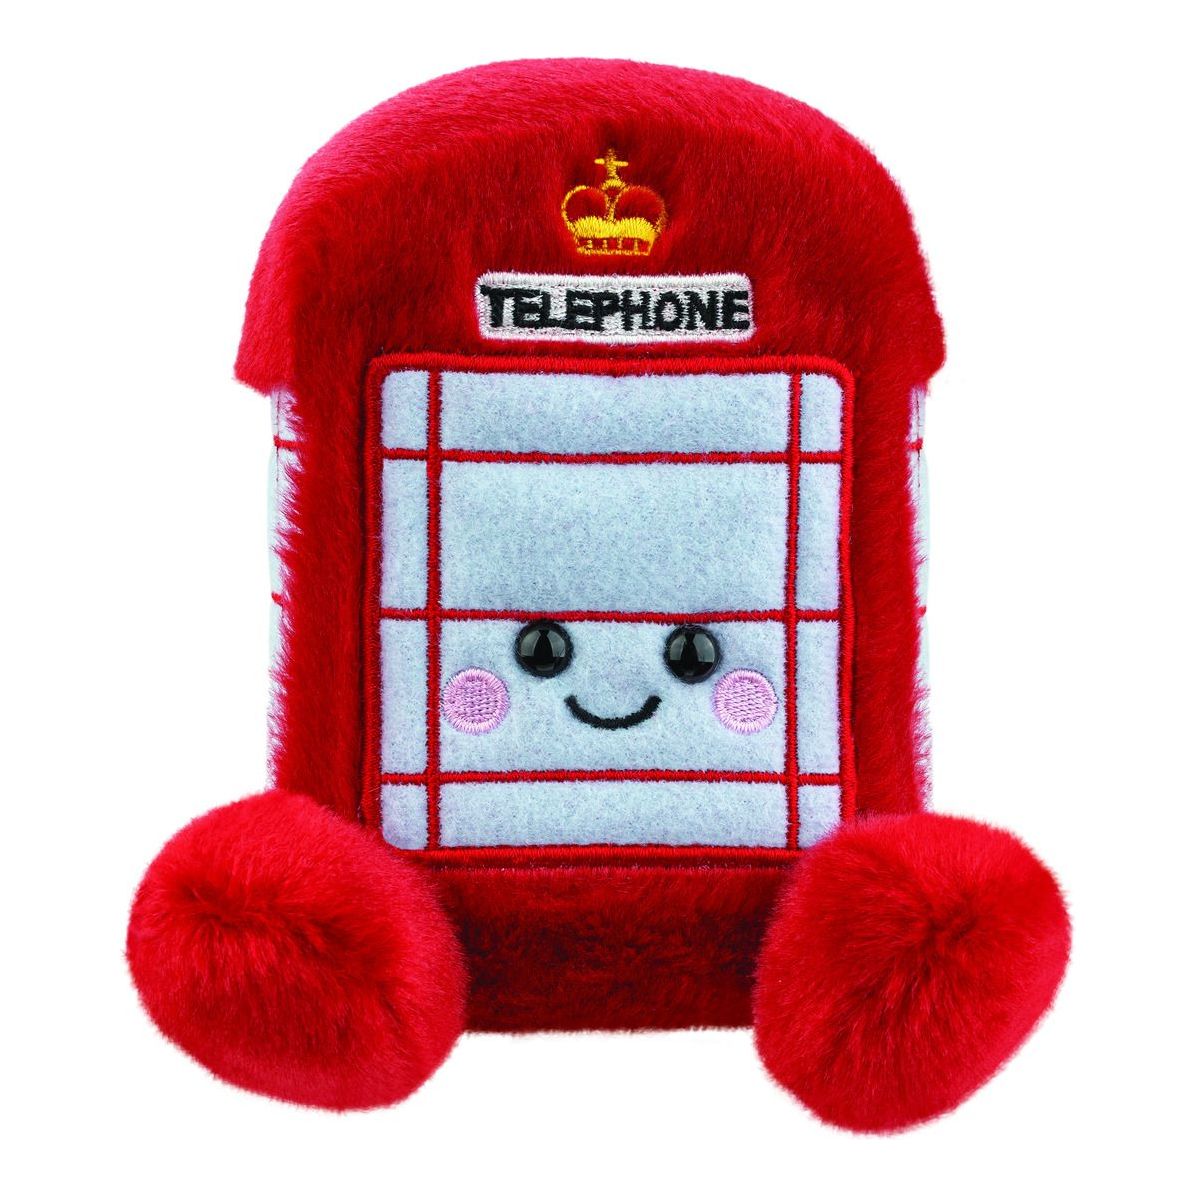 Palm Pals Telephone Box Plush Aurora